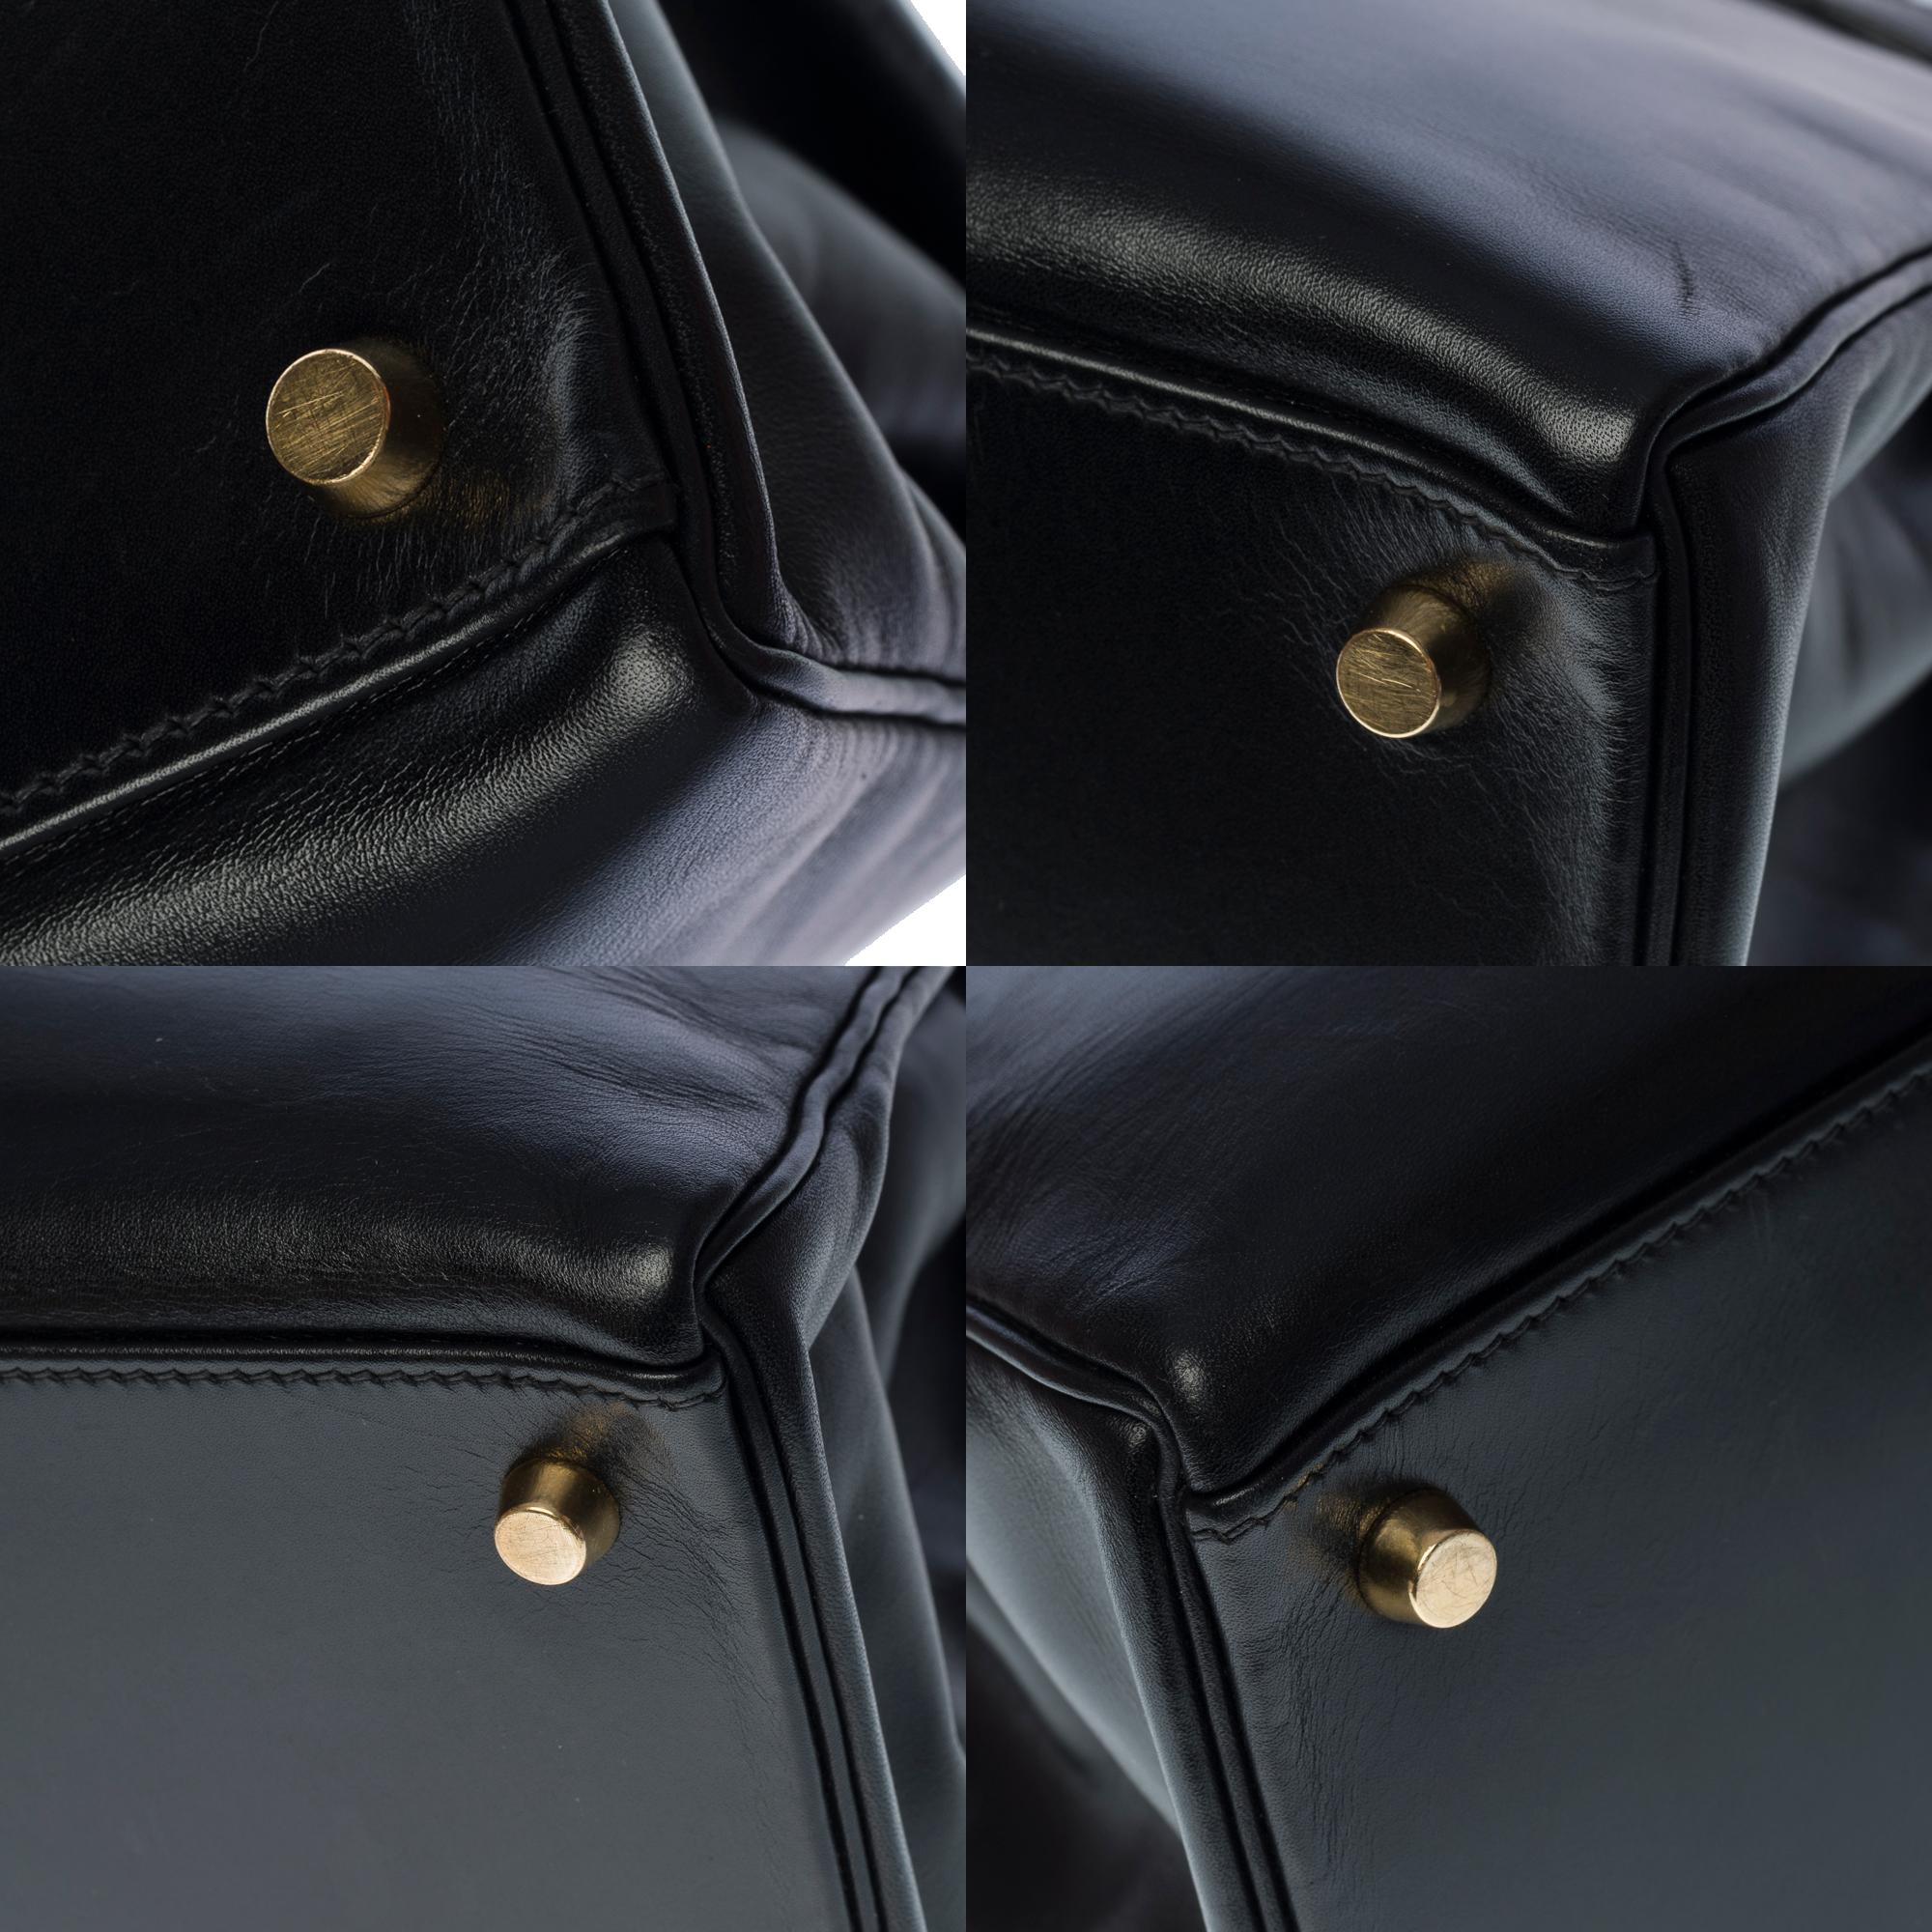 Rare Hermès Kelly 32 retourne handbag strap in black box calfskin leather, GHW 4